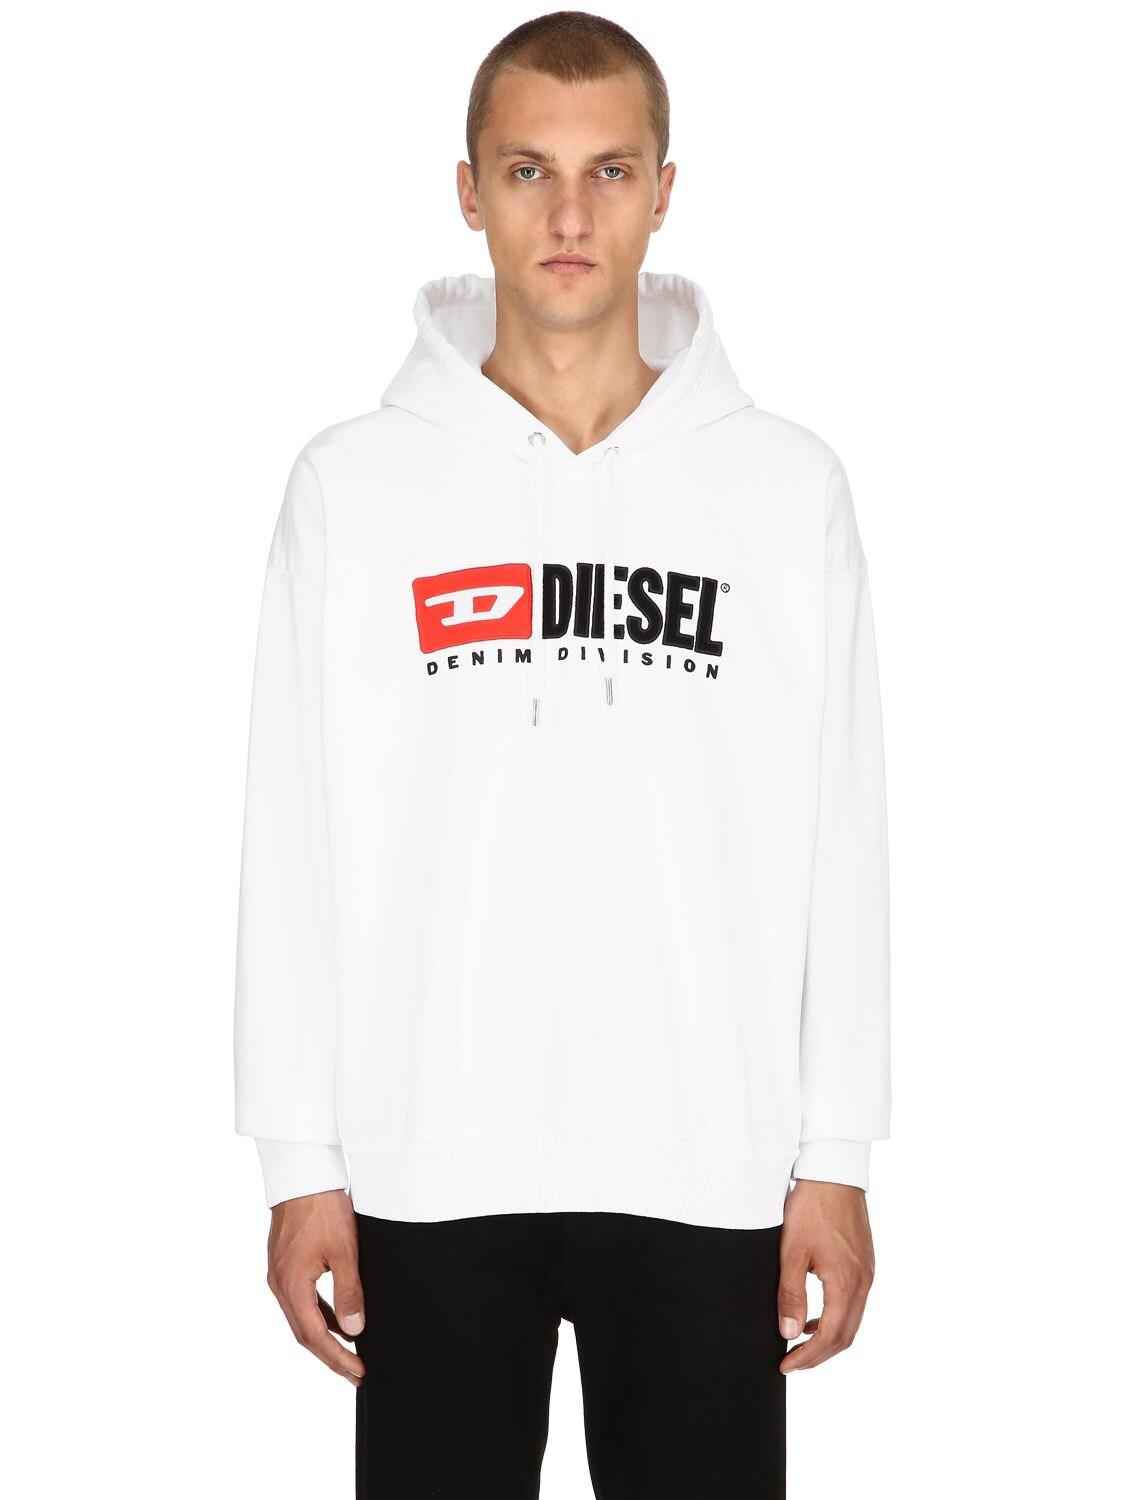 DIESEL Logo Cotton Jersey Sweatshirt Hoodie in White for Men - Lyst